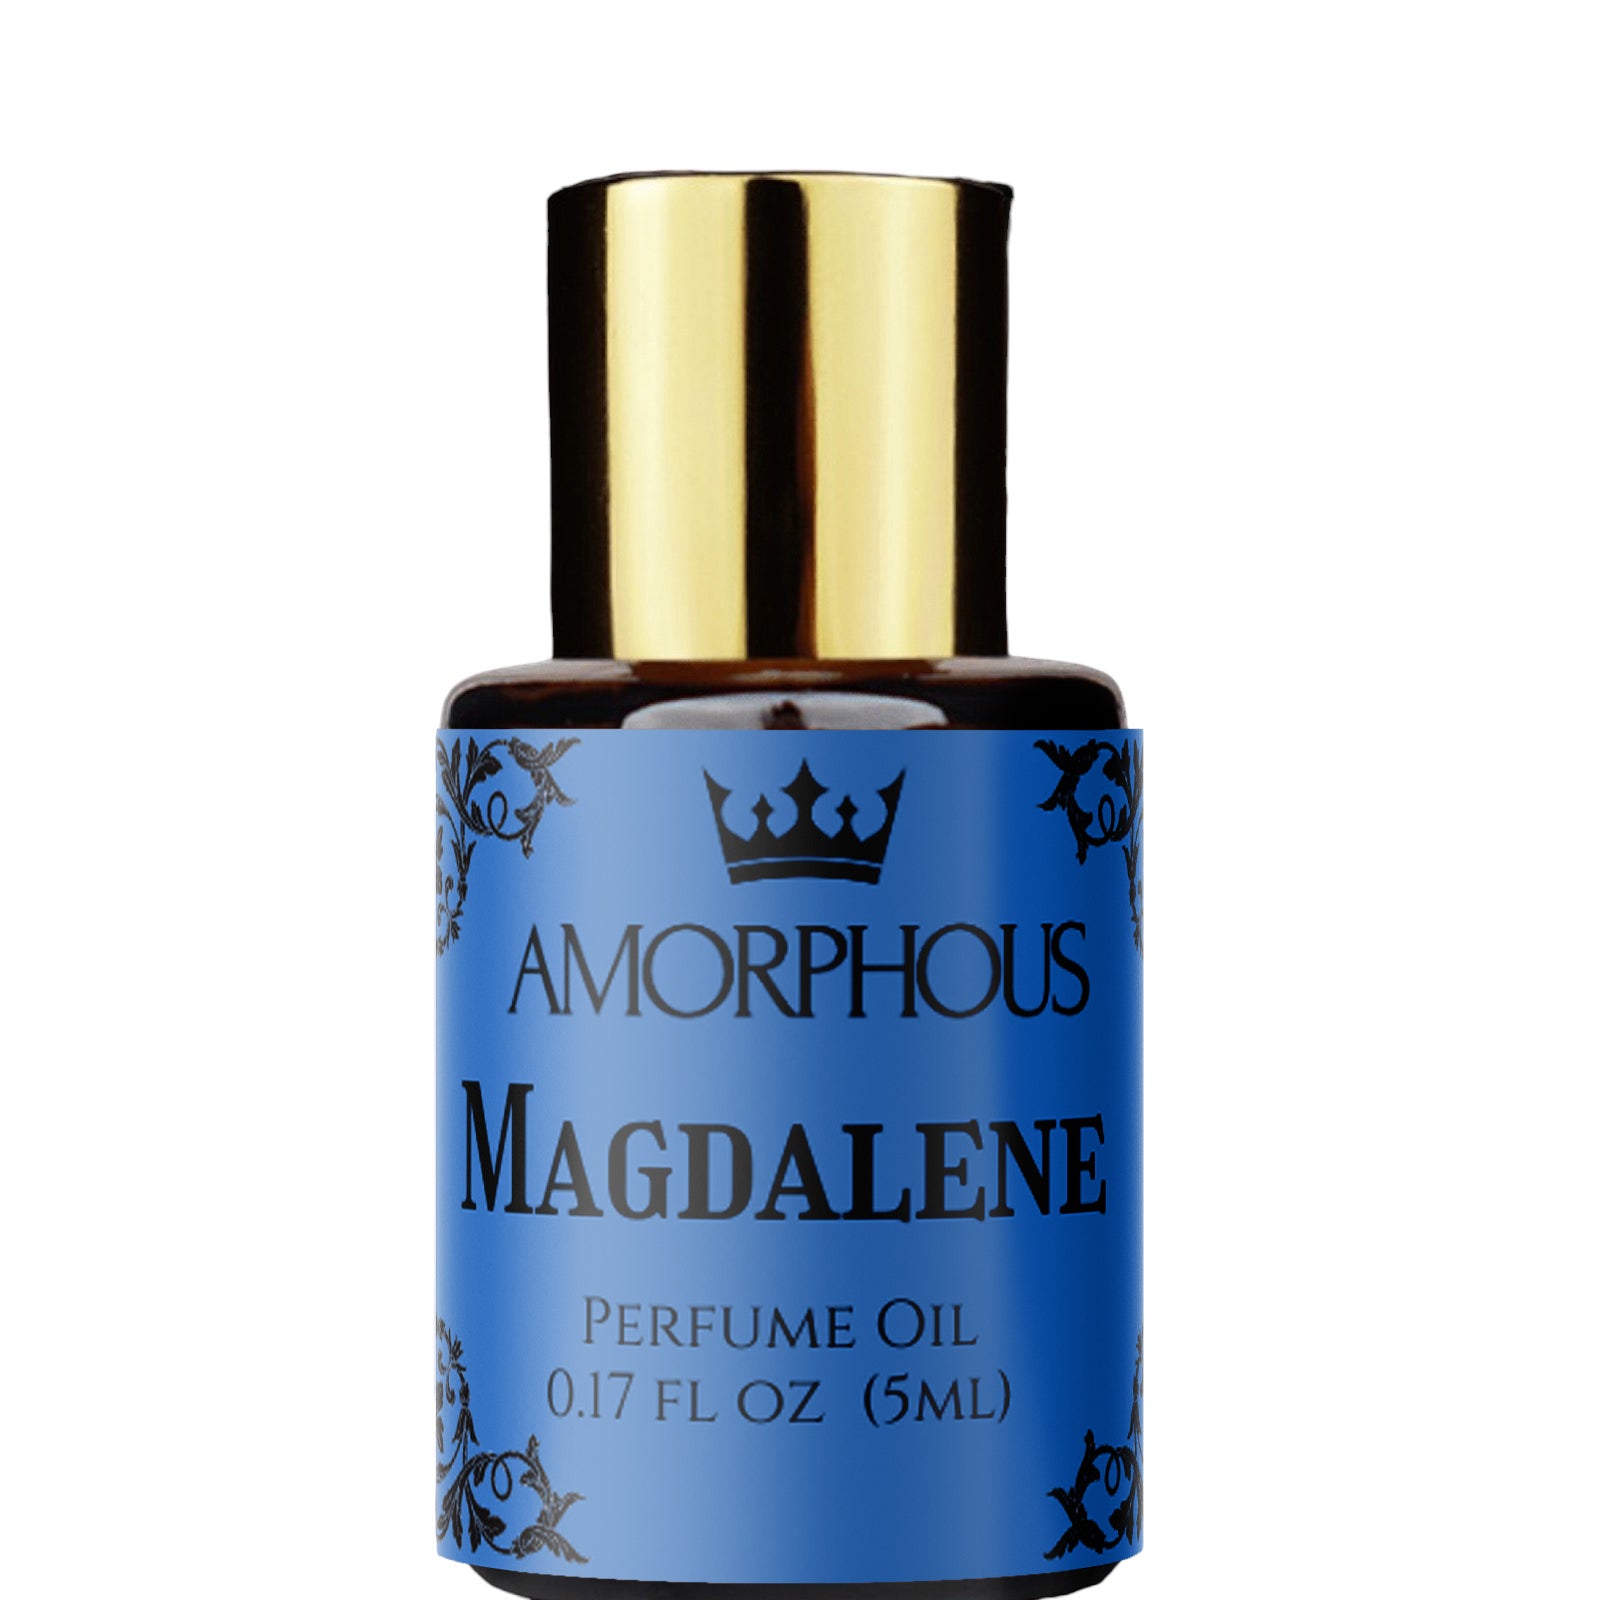 Magdalene perfume